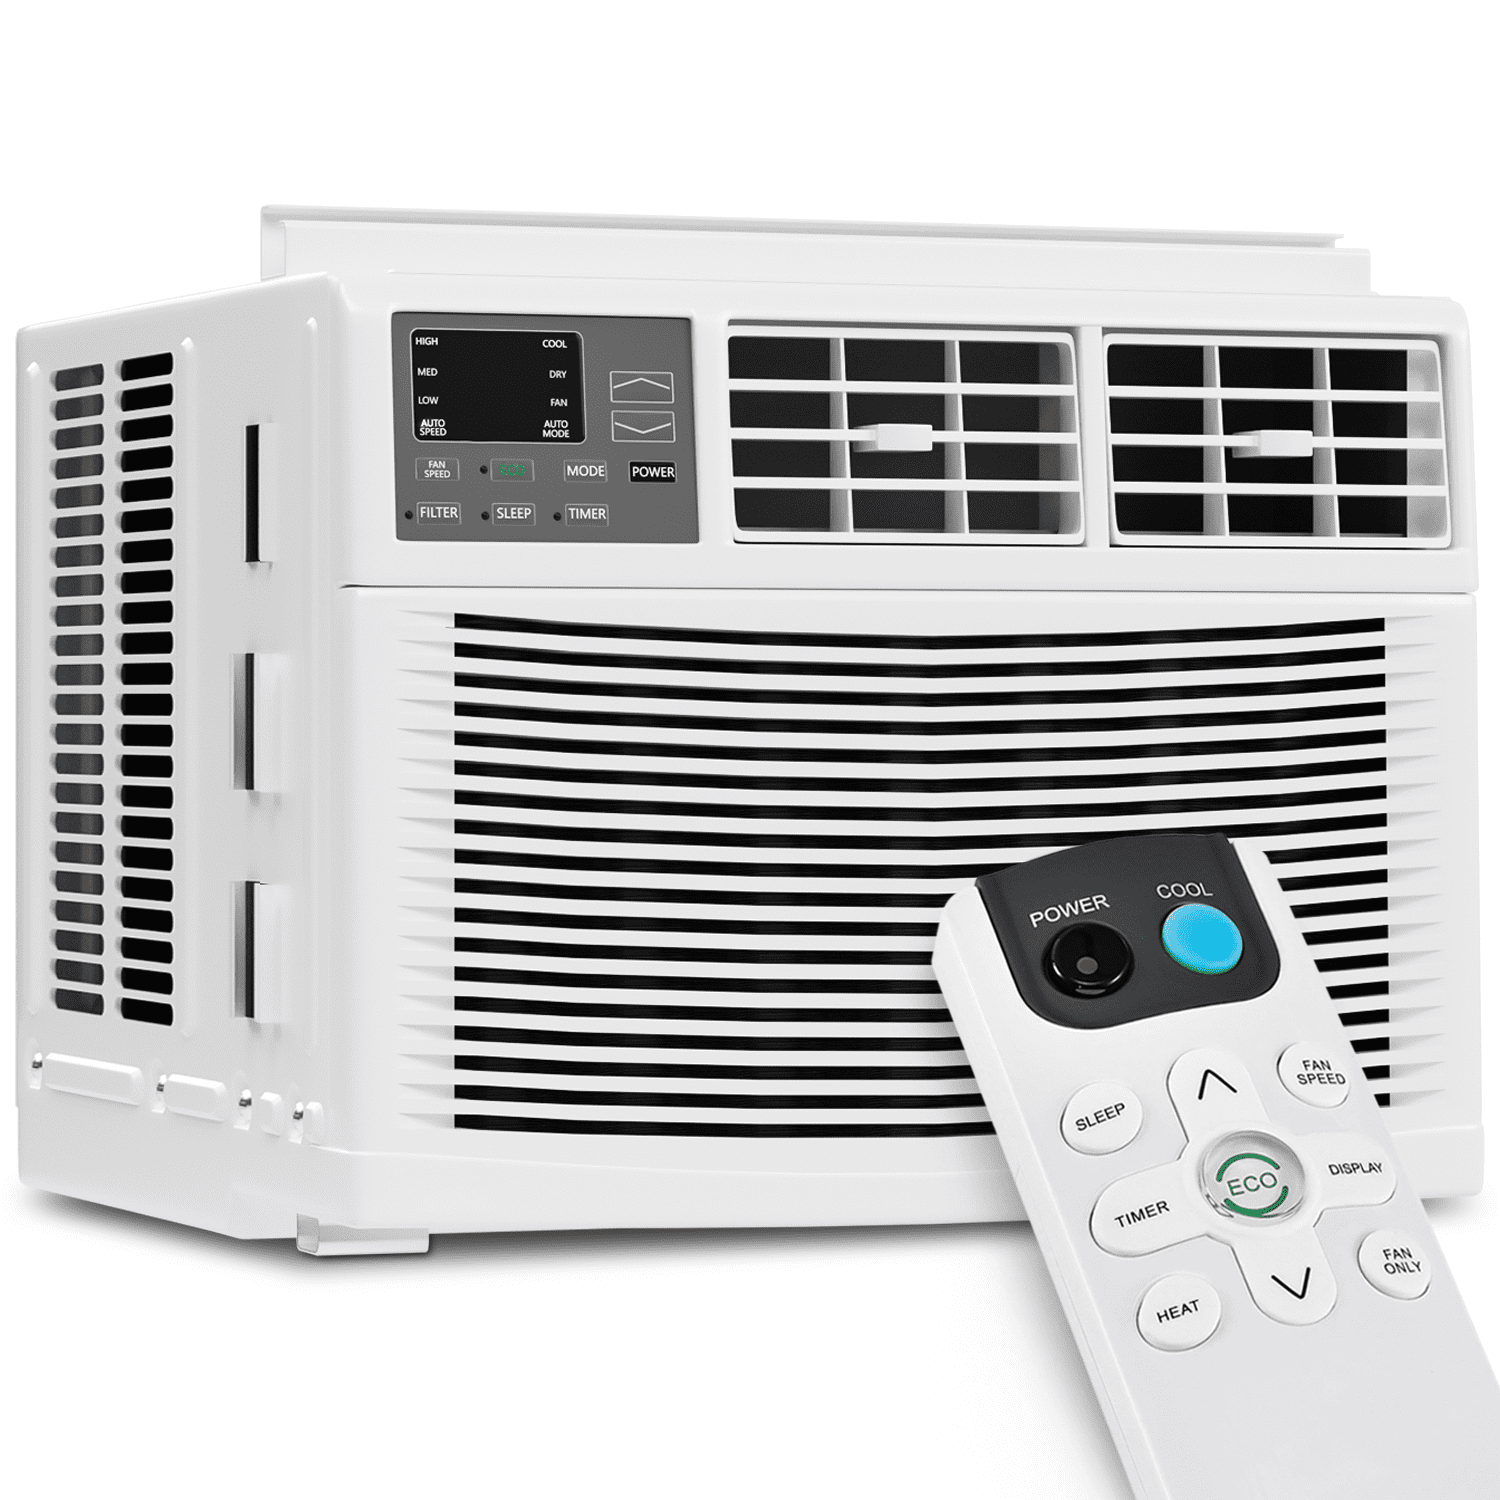 Black + Decker BLACK+DECKER 6000 BTU Window Air Conditioner Unit, AC Cools  Up to 250 Square Feet, White & Reviews